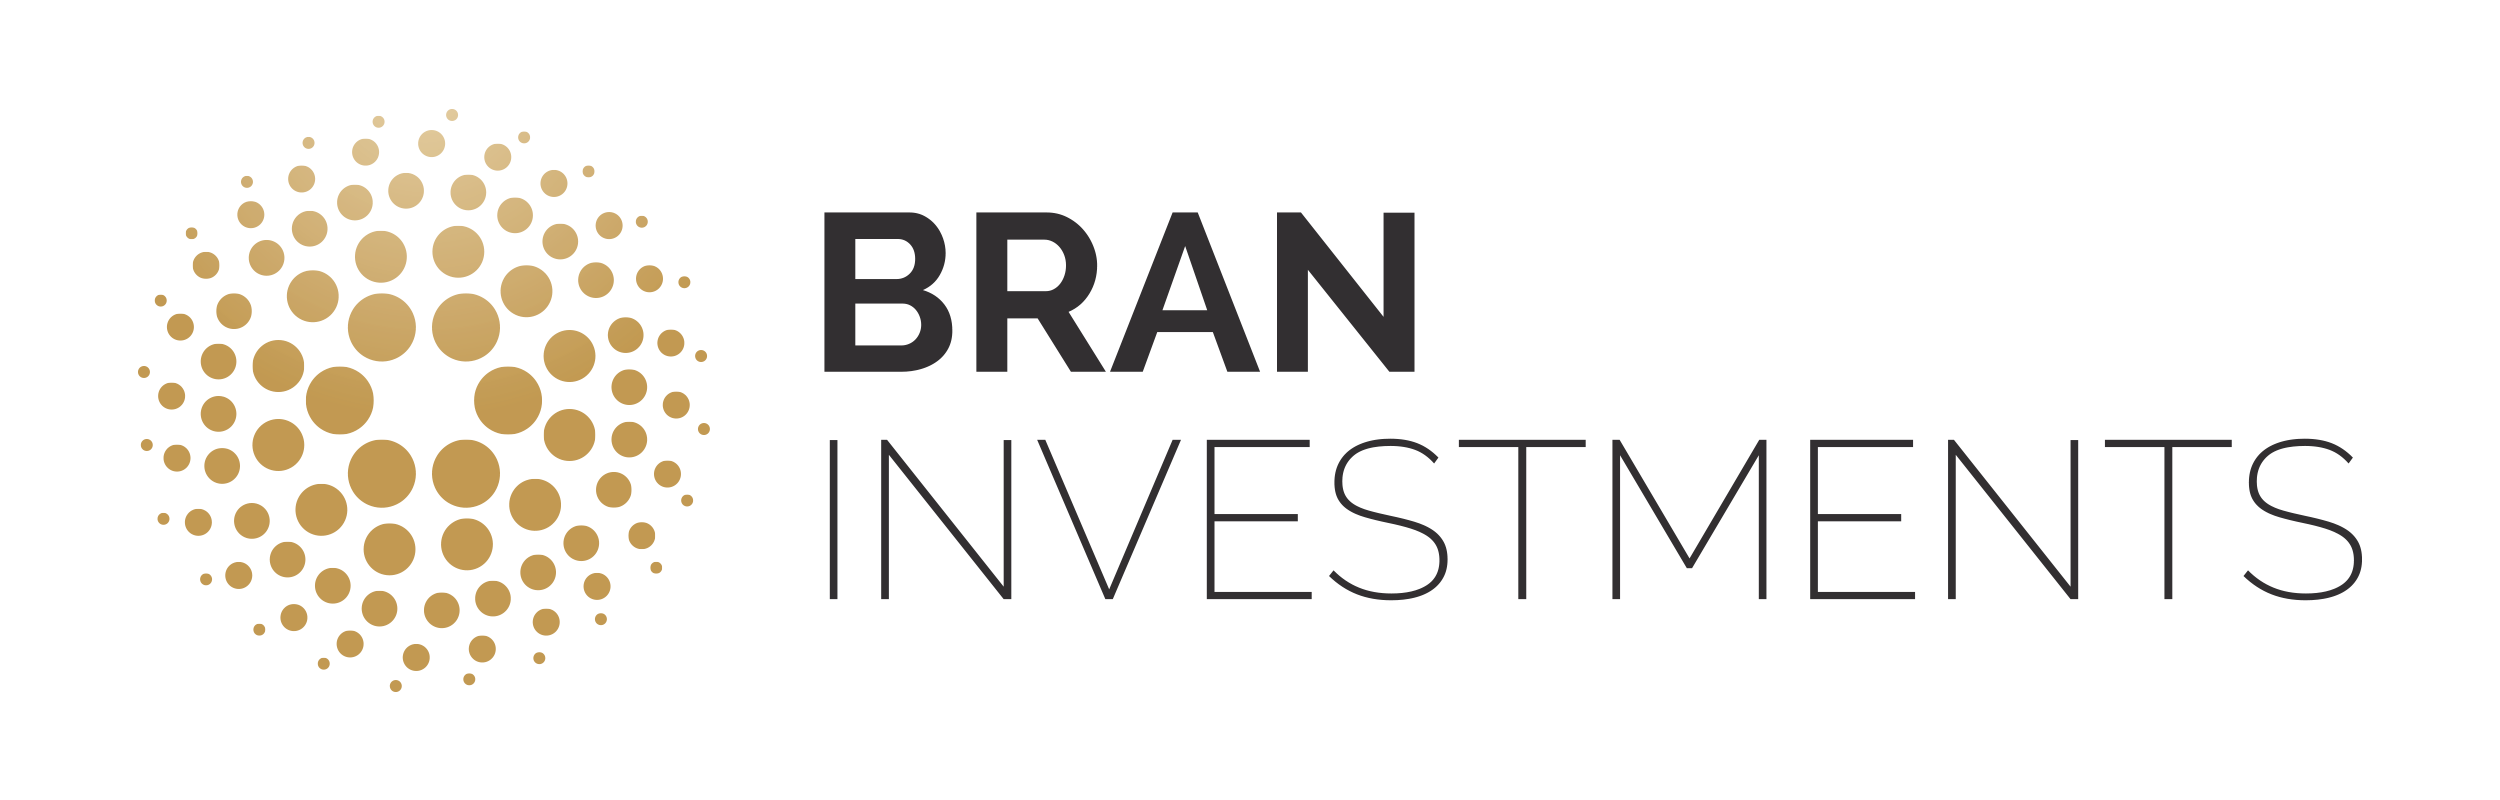 BRANinvestments_BlackLogo